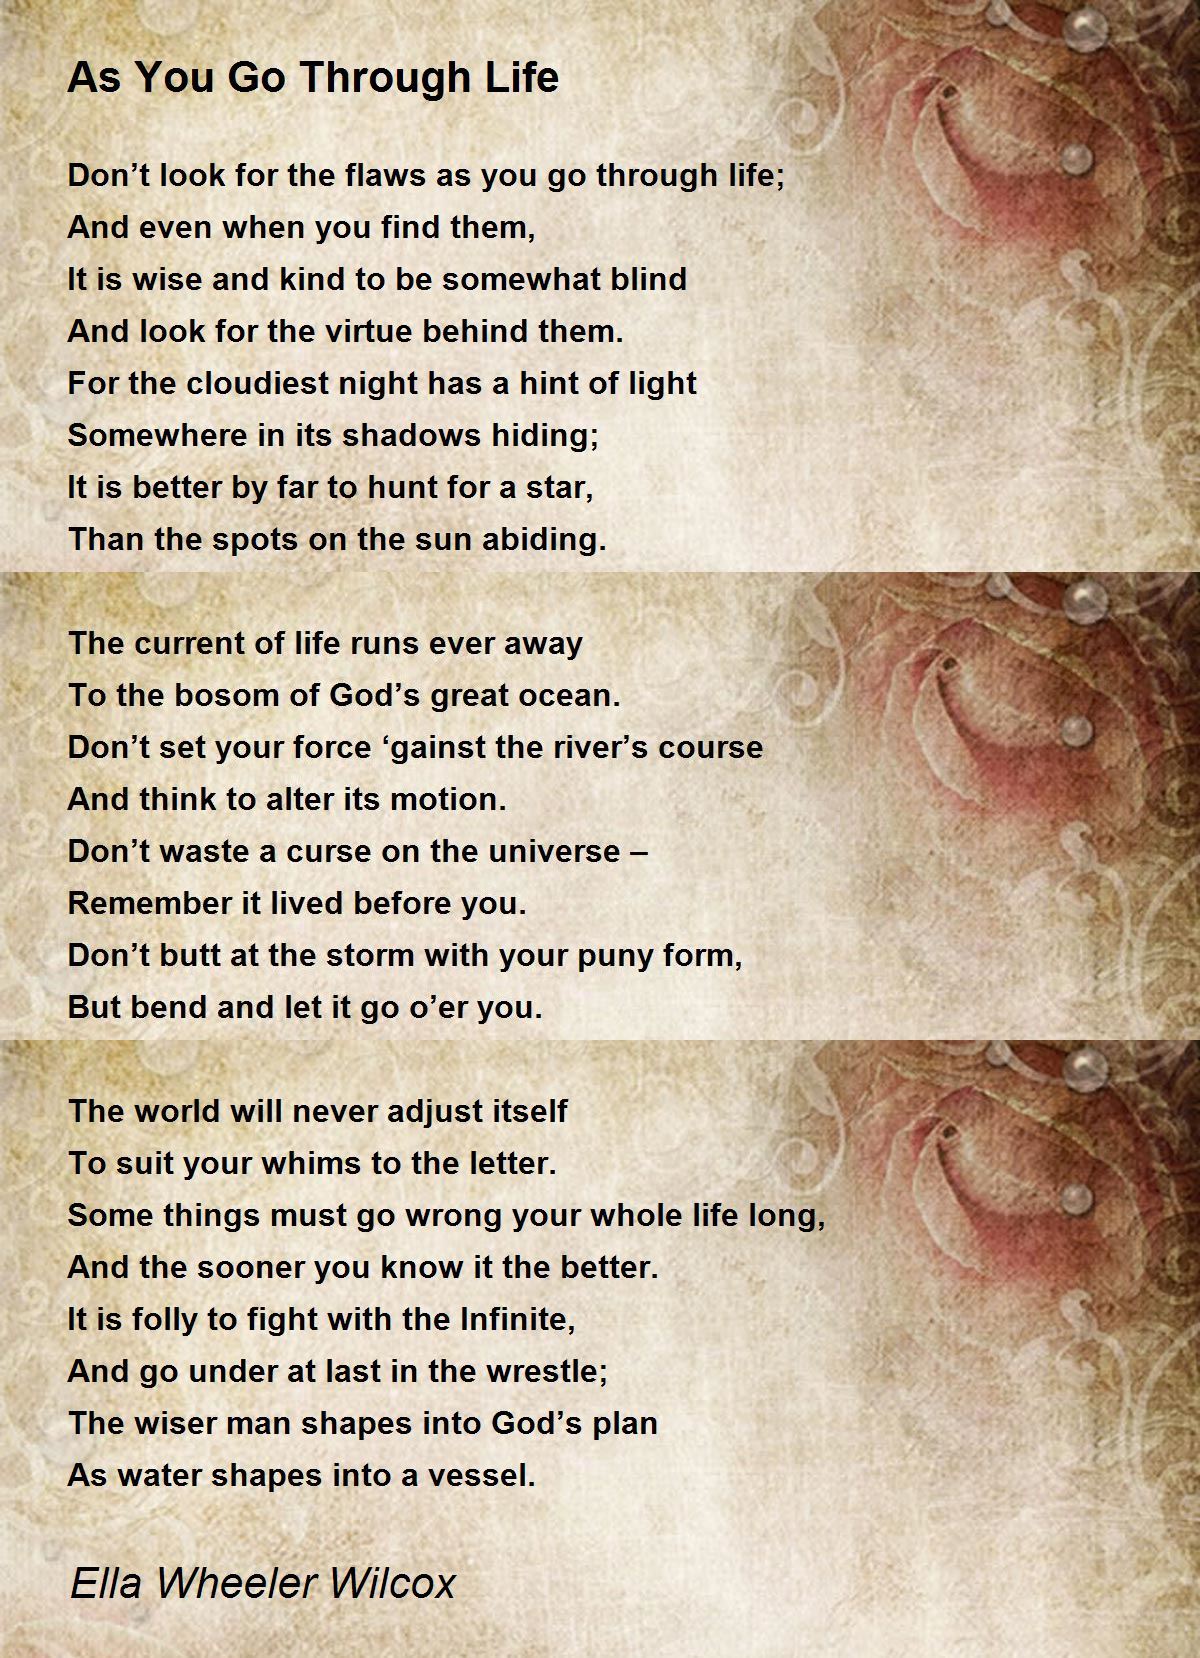 As You Go Through Life Poem by Ella Wheeler Wilcox - Poem Hunter